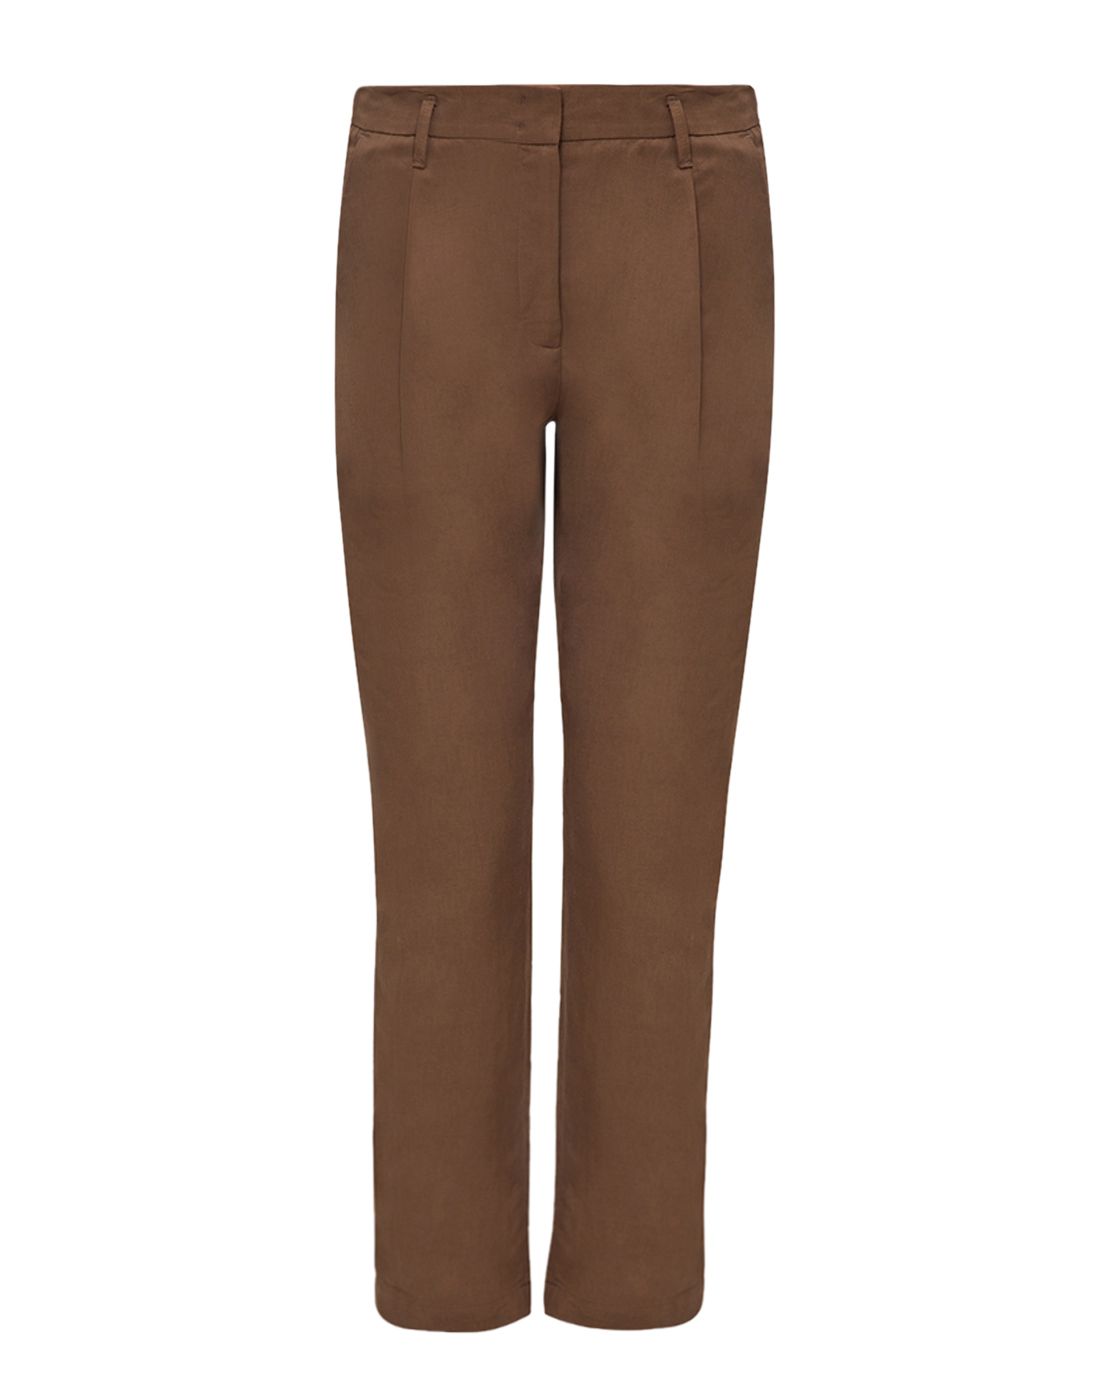 Женские коричневые брюки Dorothee Schumacher S340323/780-1